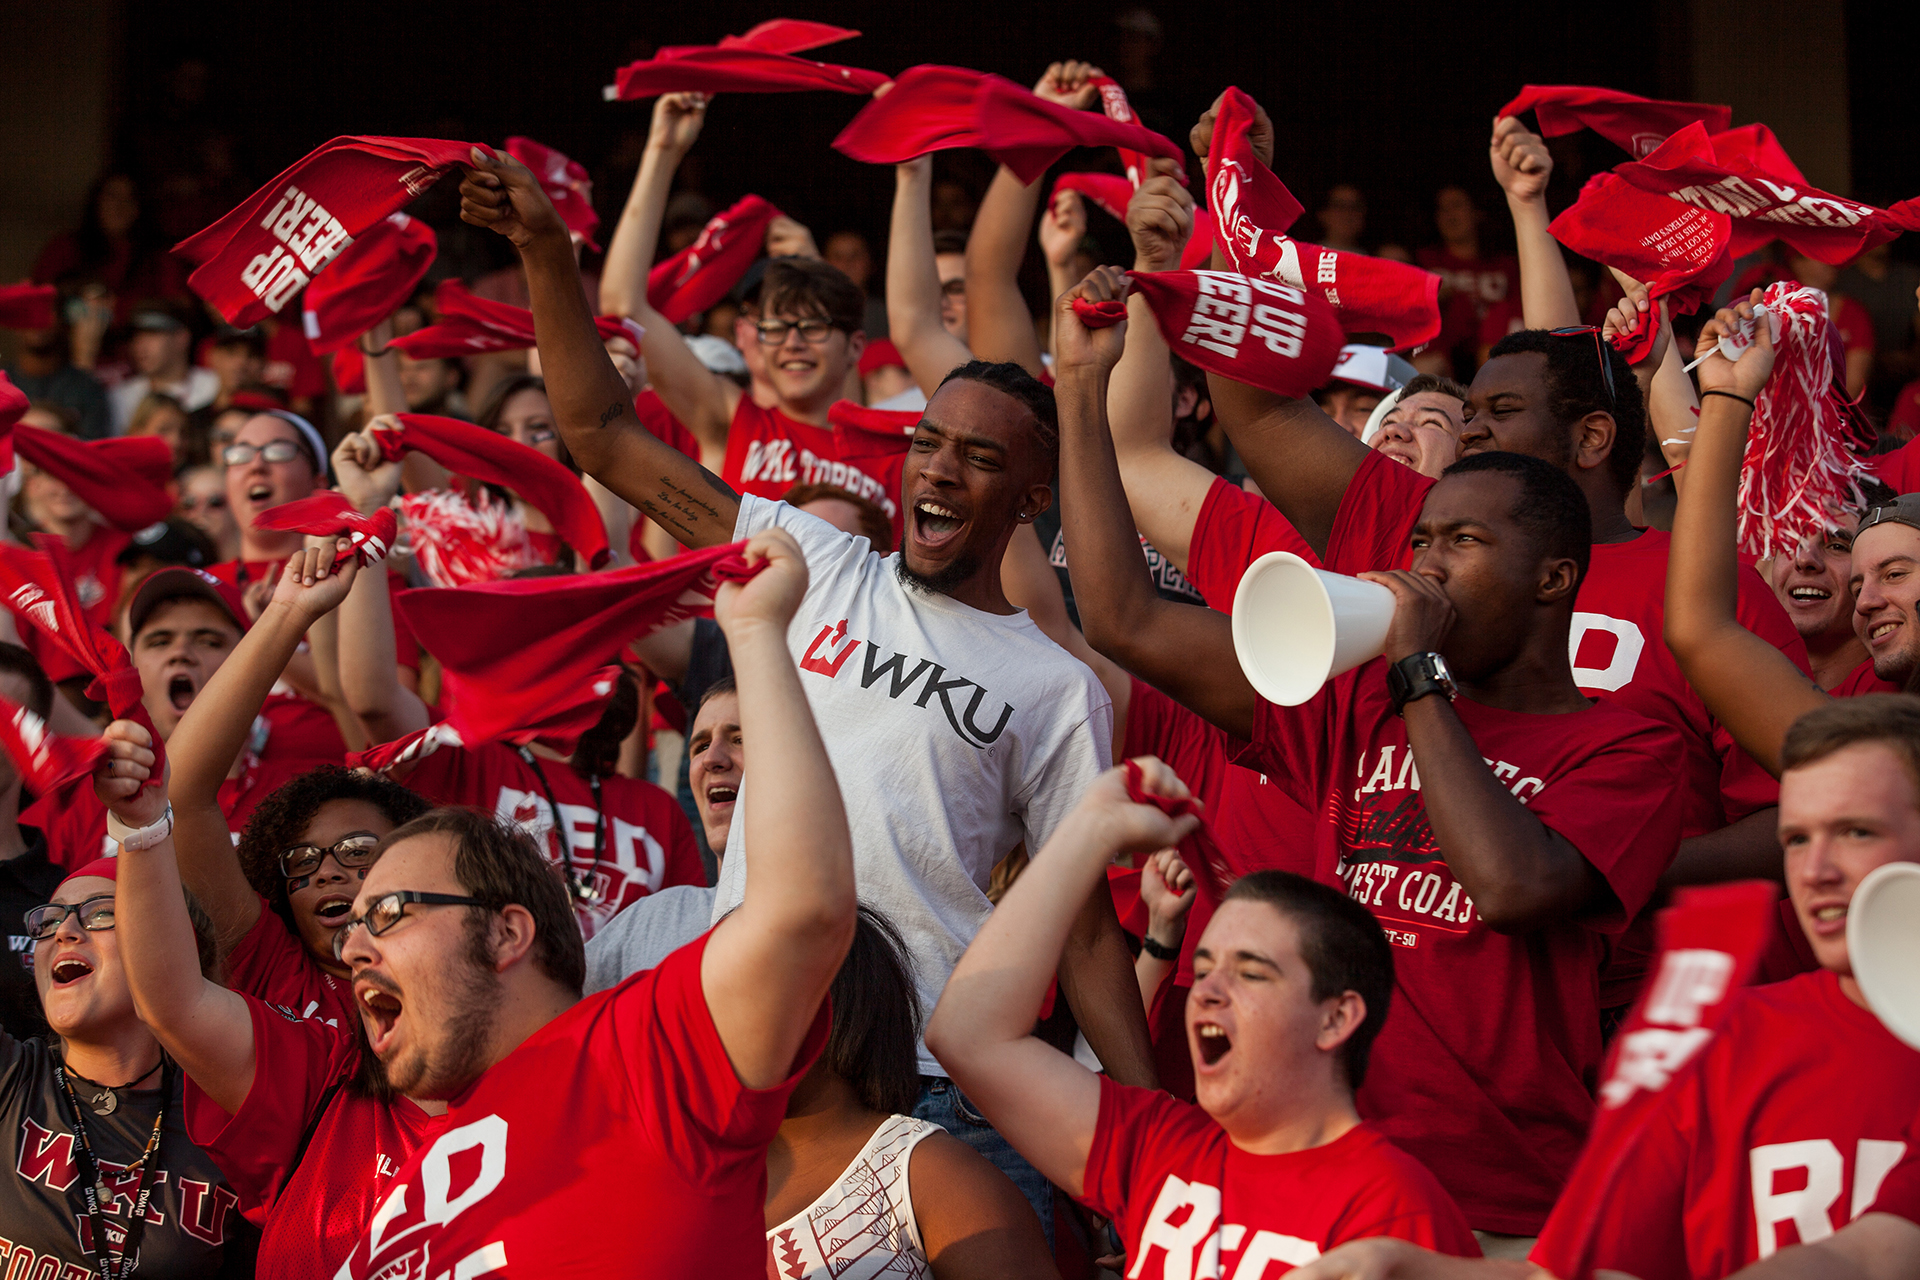 Students at a pep rally waving red WKU towels